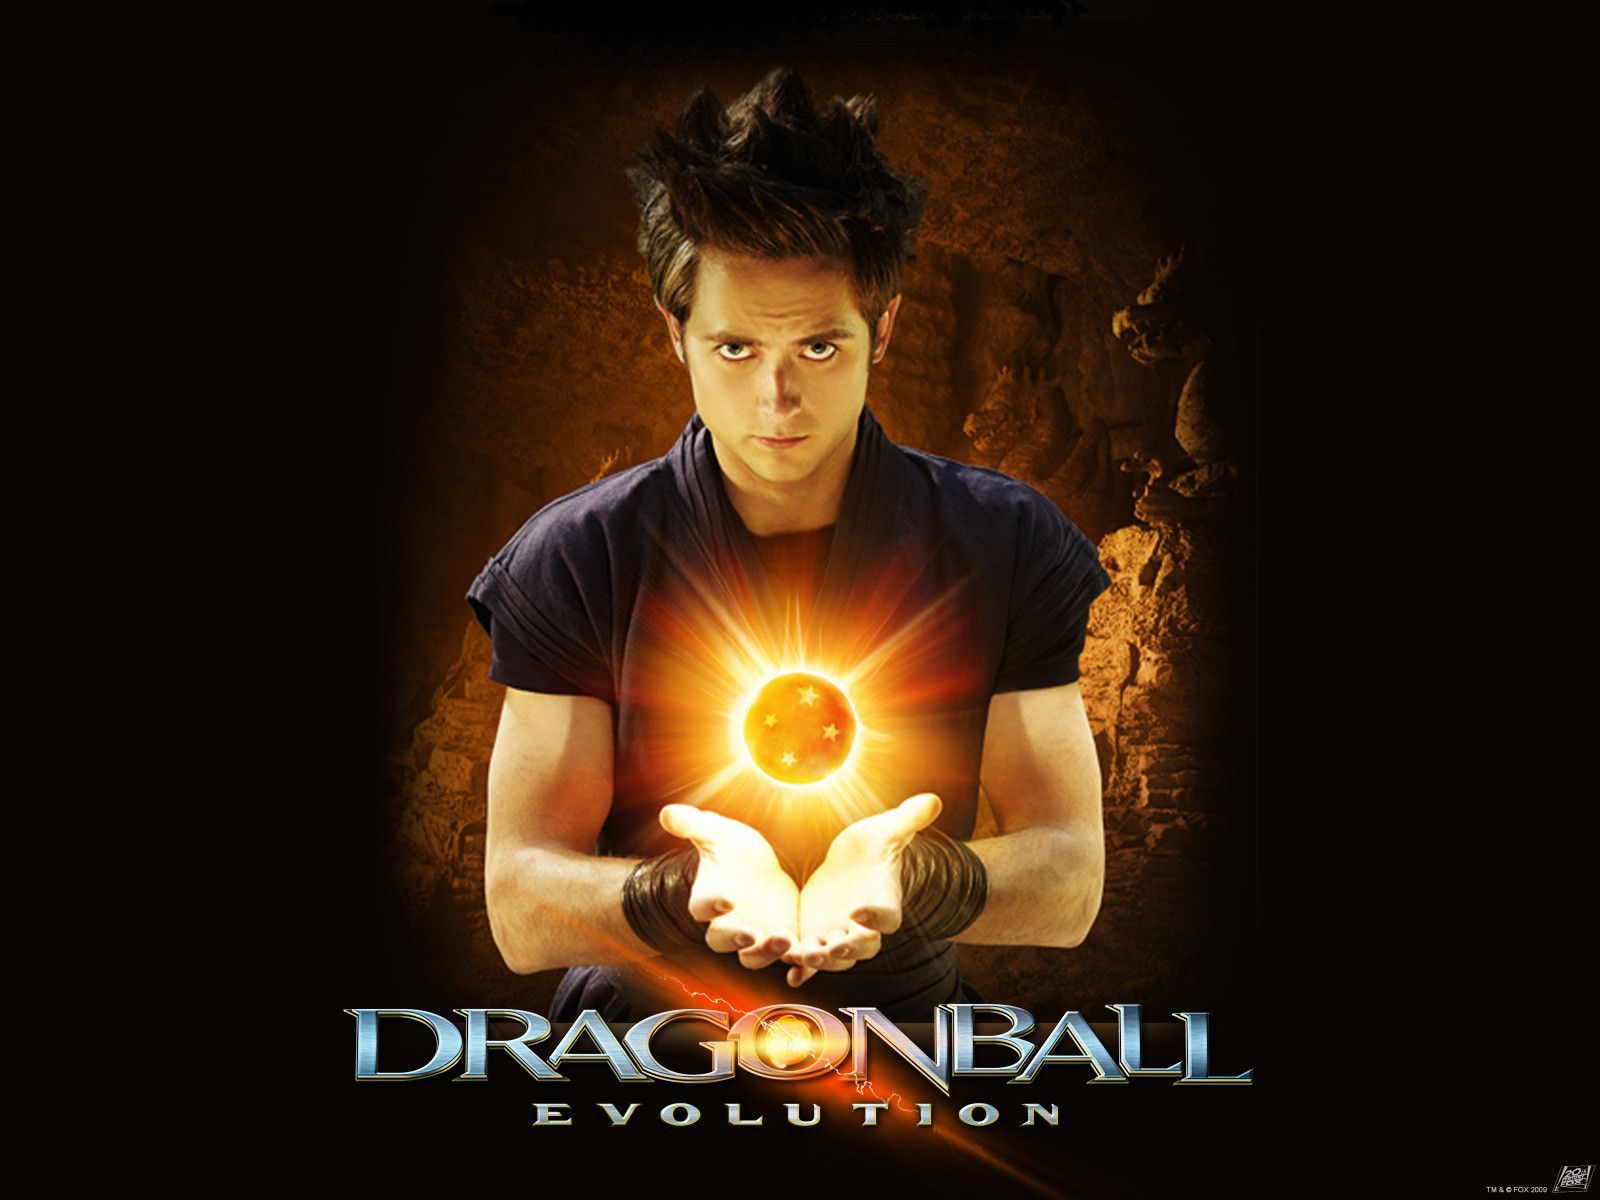 Dragonball Evolution Wallpaper di 2020